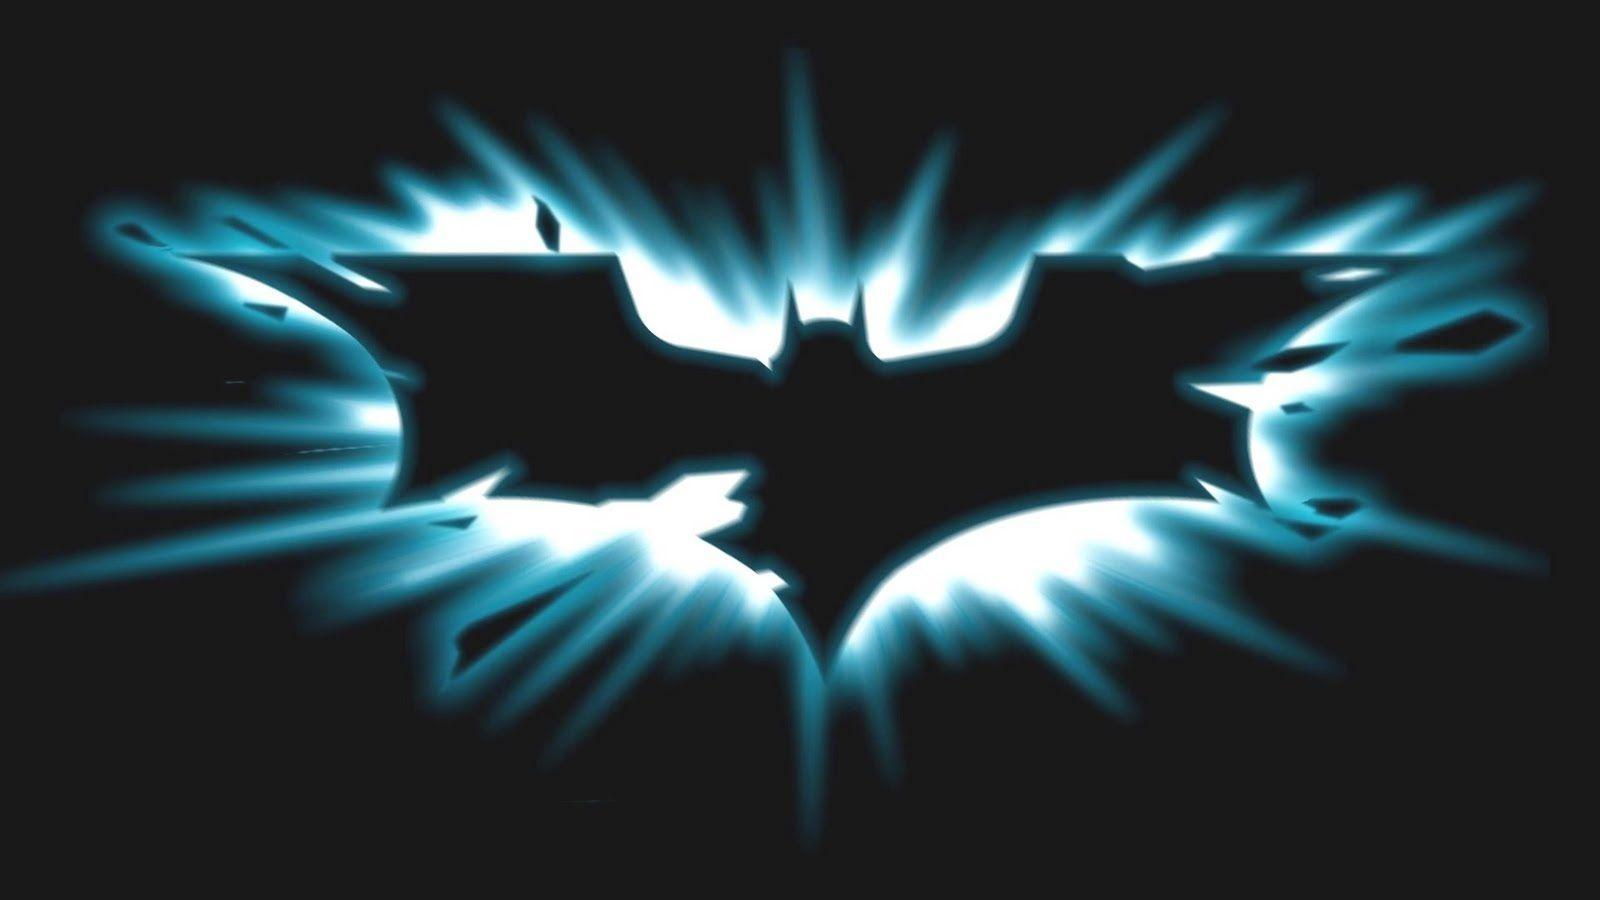 Batman Logo Wallpaper and Background